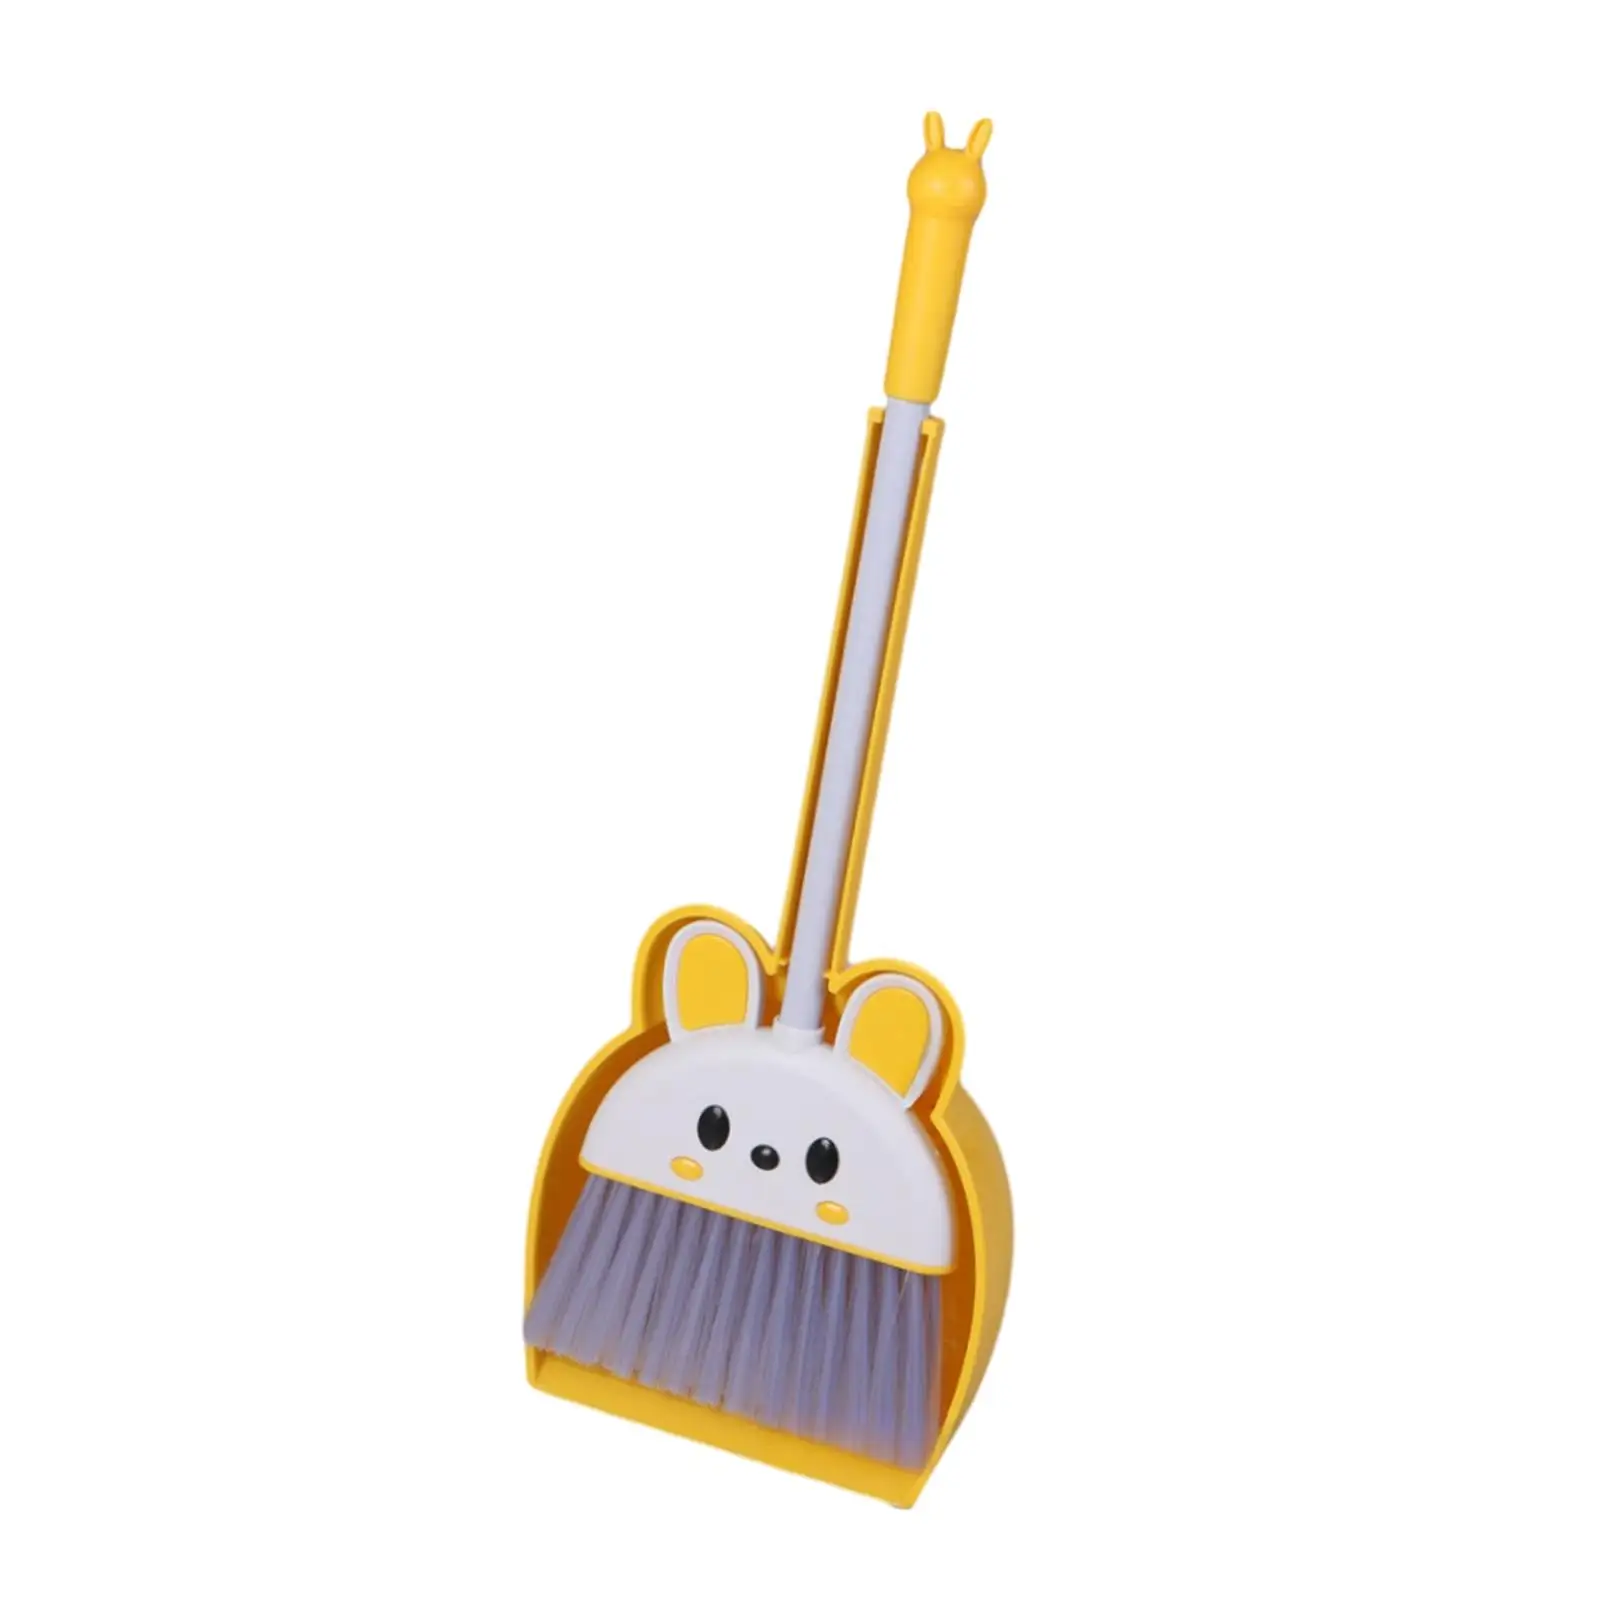 Mini Broom and Dustpan Set for Kids Pretend Play for Kindergarten Preschool